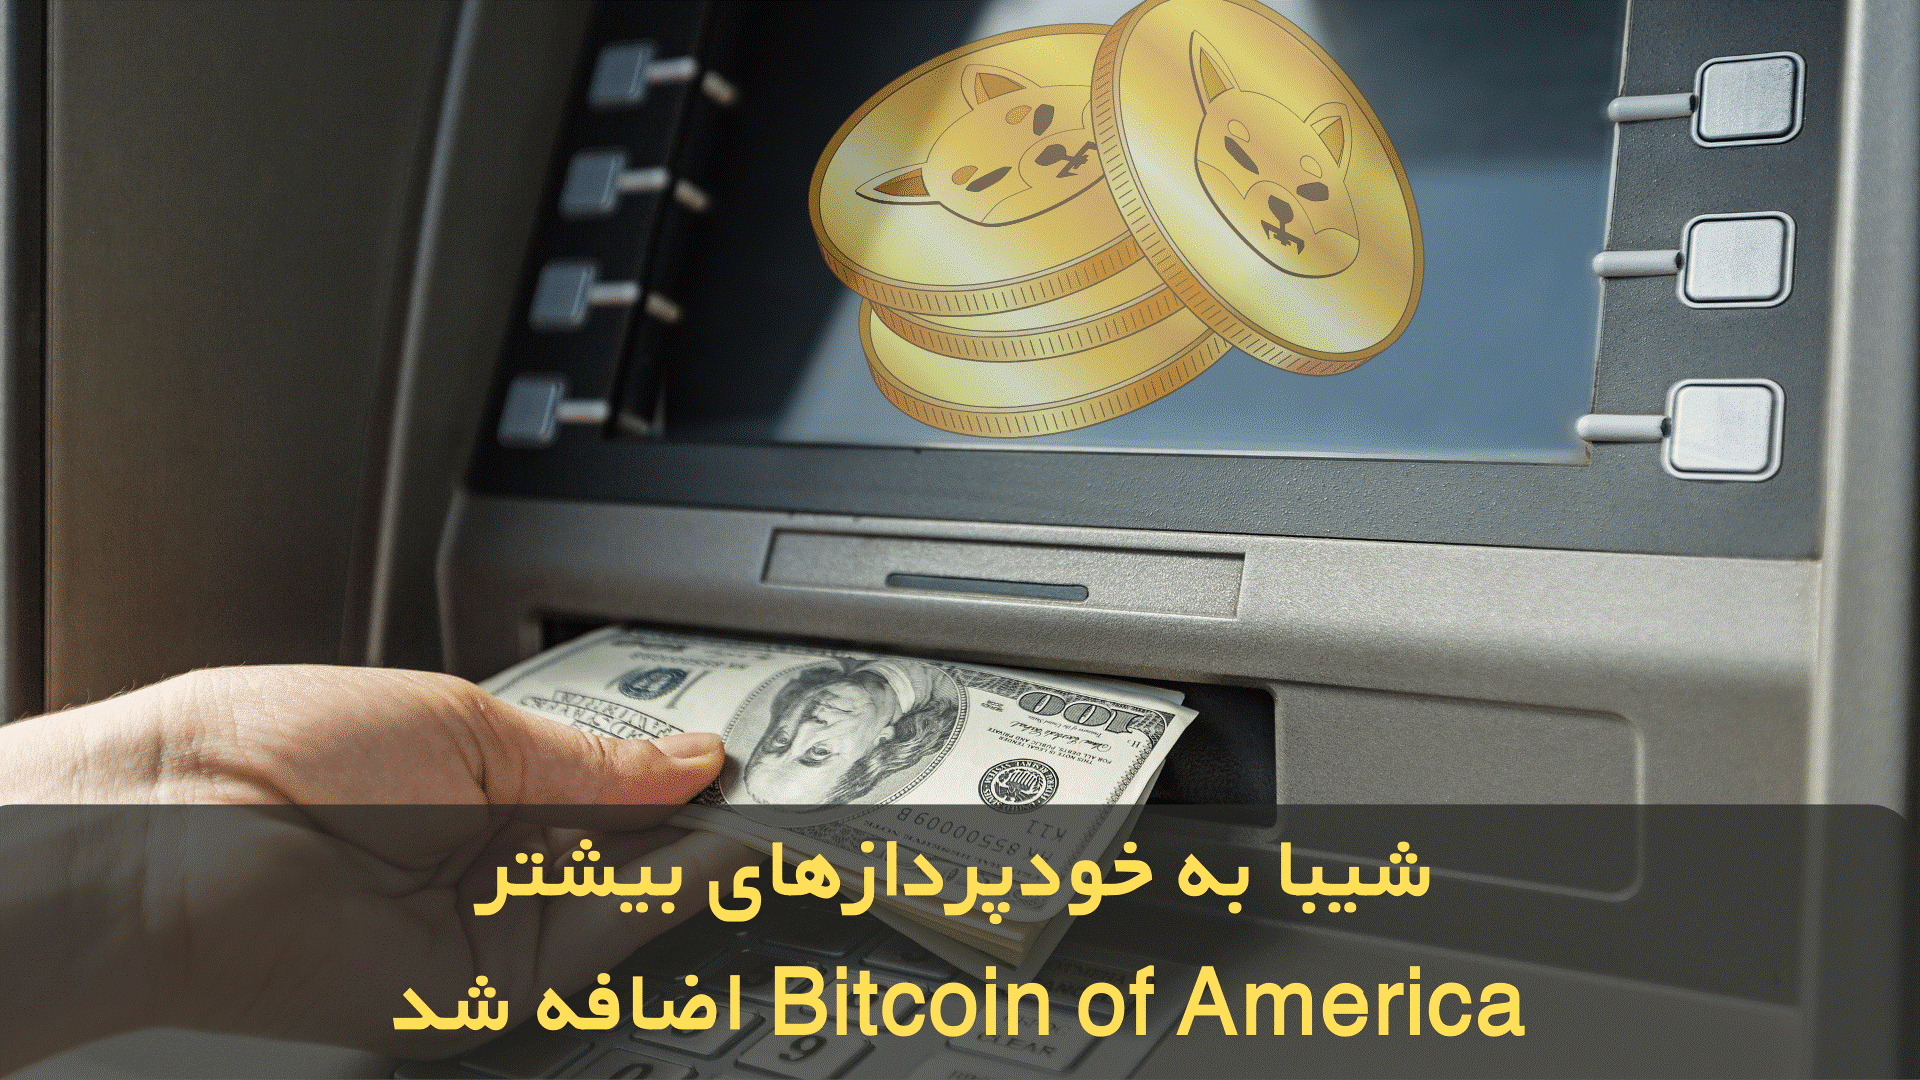  Bitcoin of America چیست